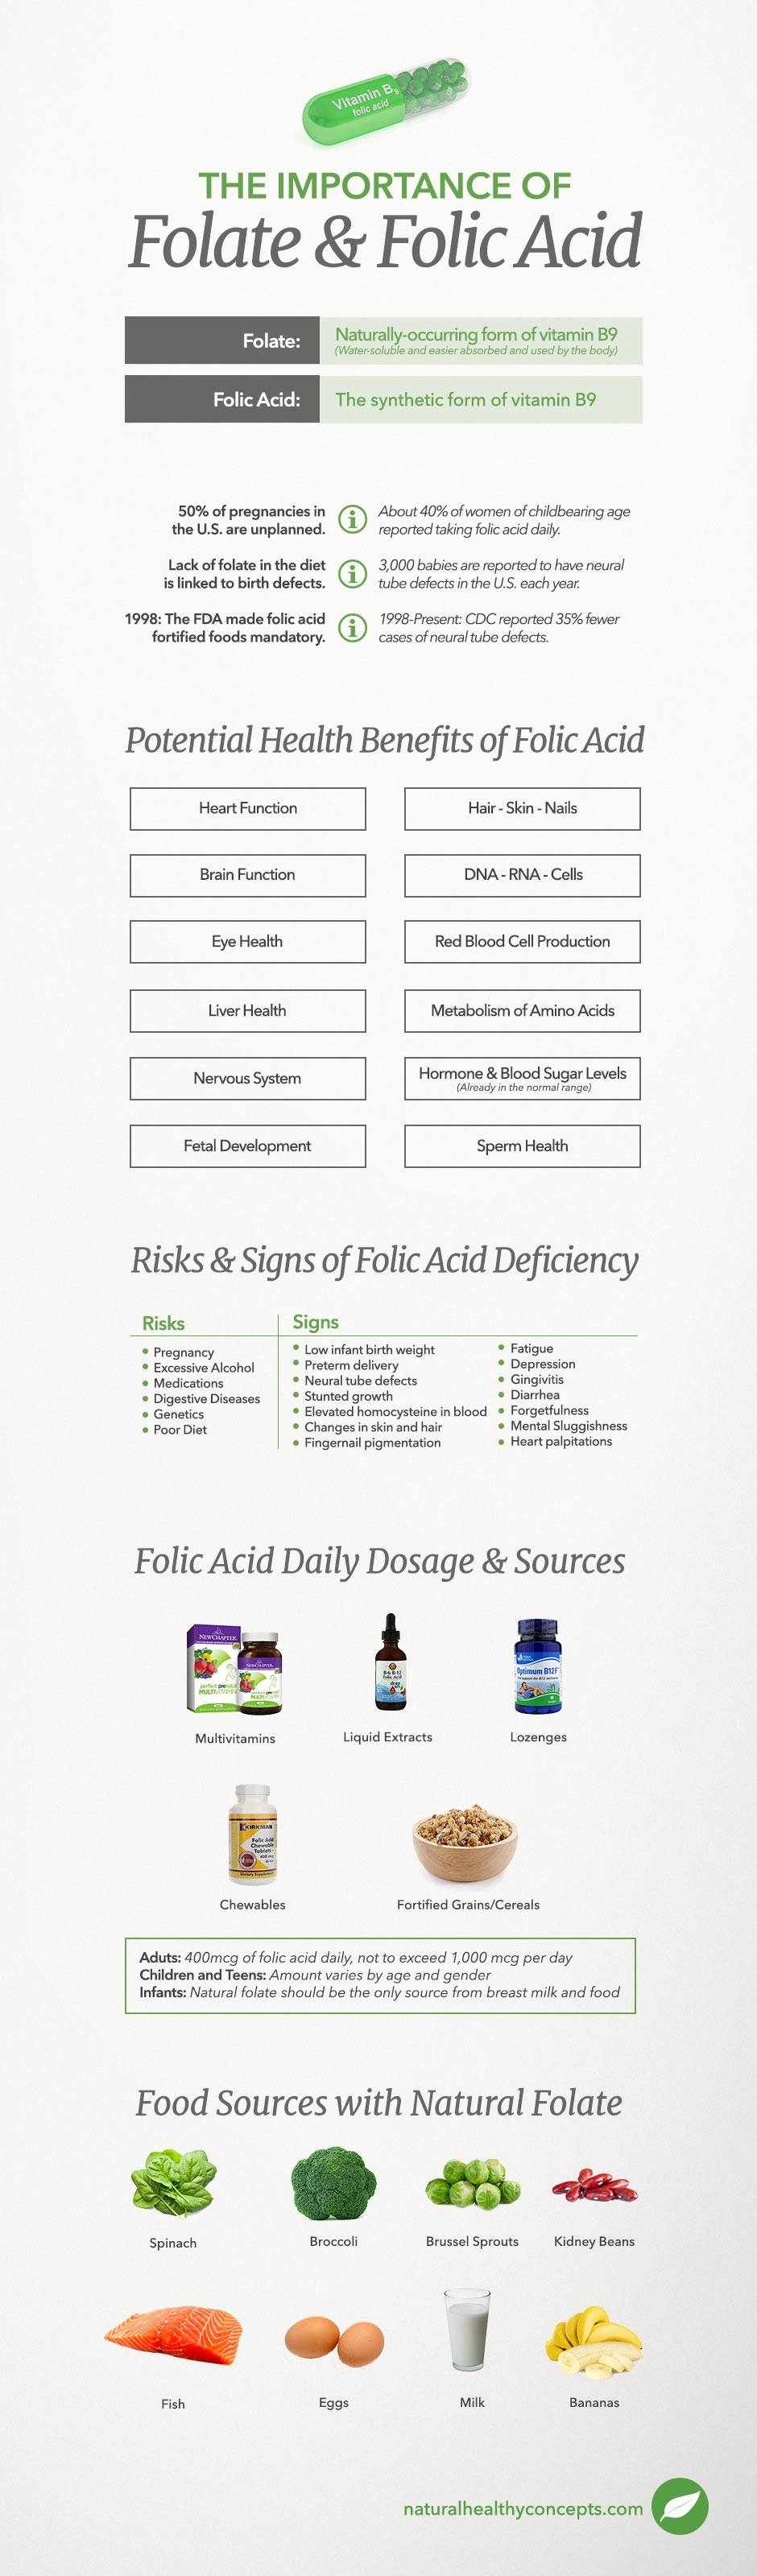 folic acid infographic